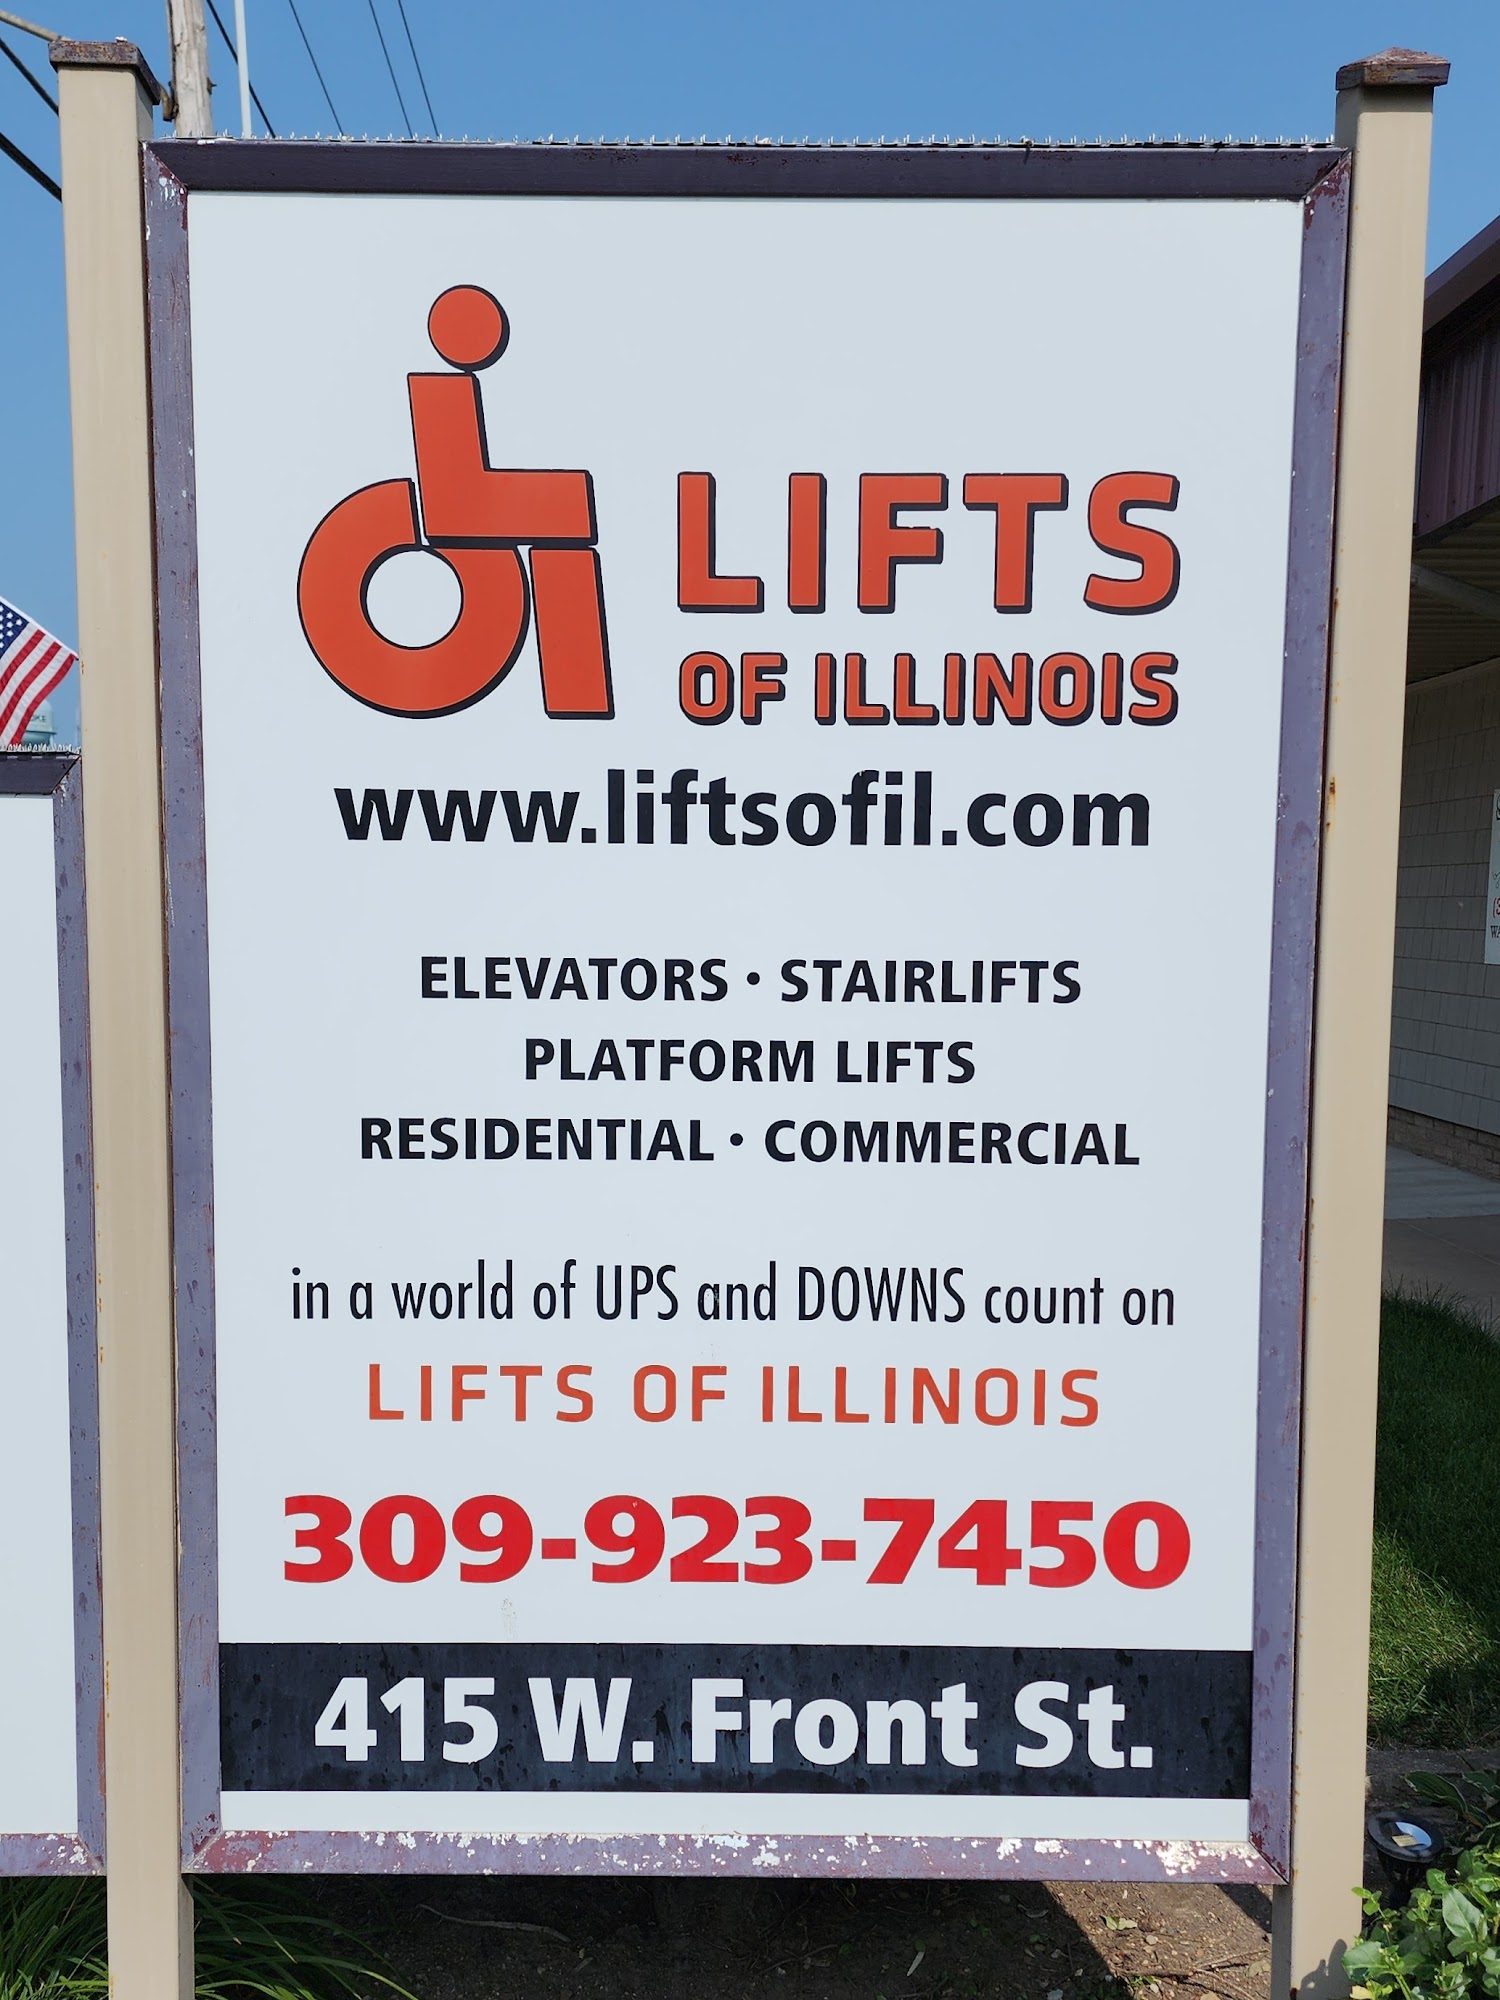 Lifts of Illinois, Inc 415 W Front St, Roanoke Illinois 61561